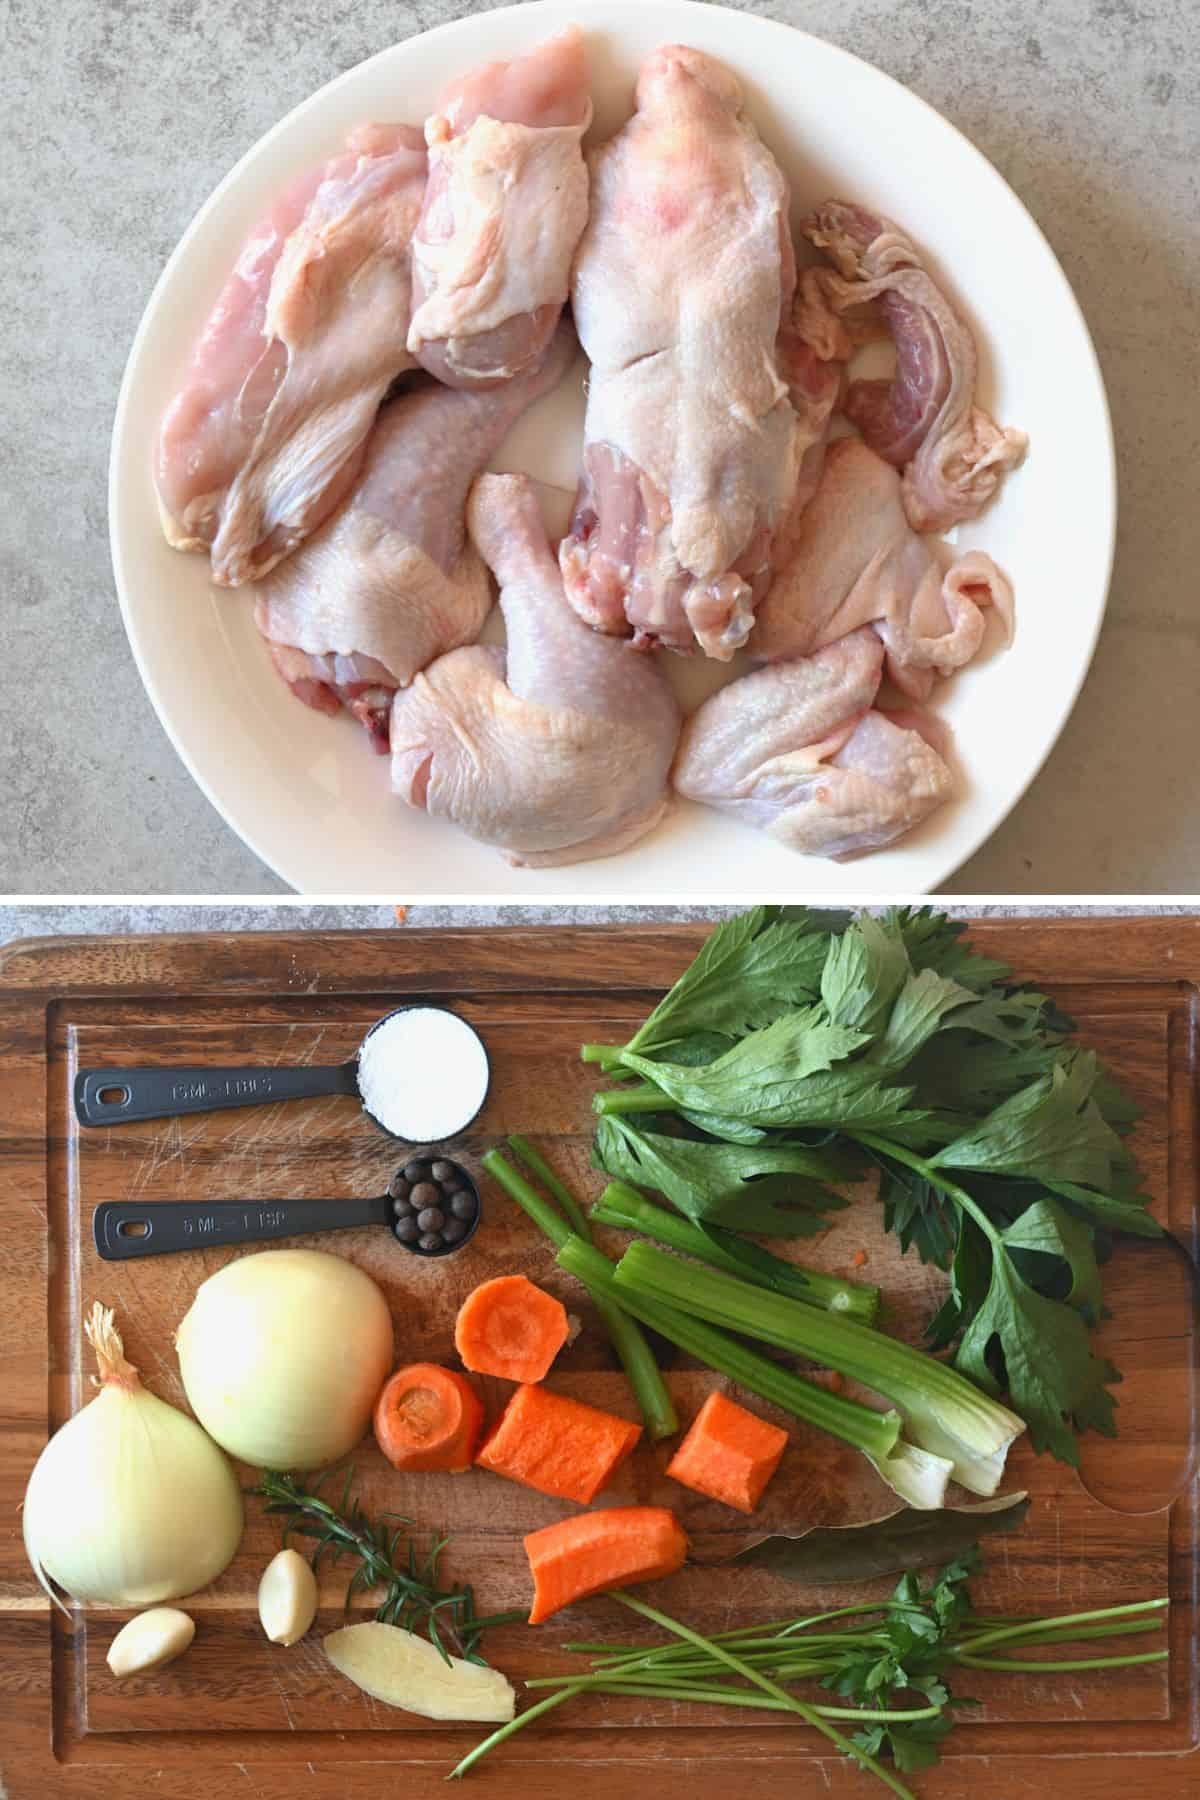 Prepared ingredients for making chicken broth